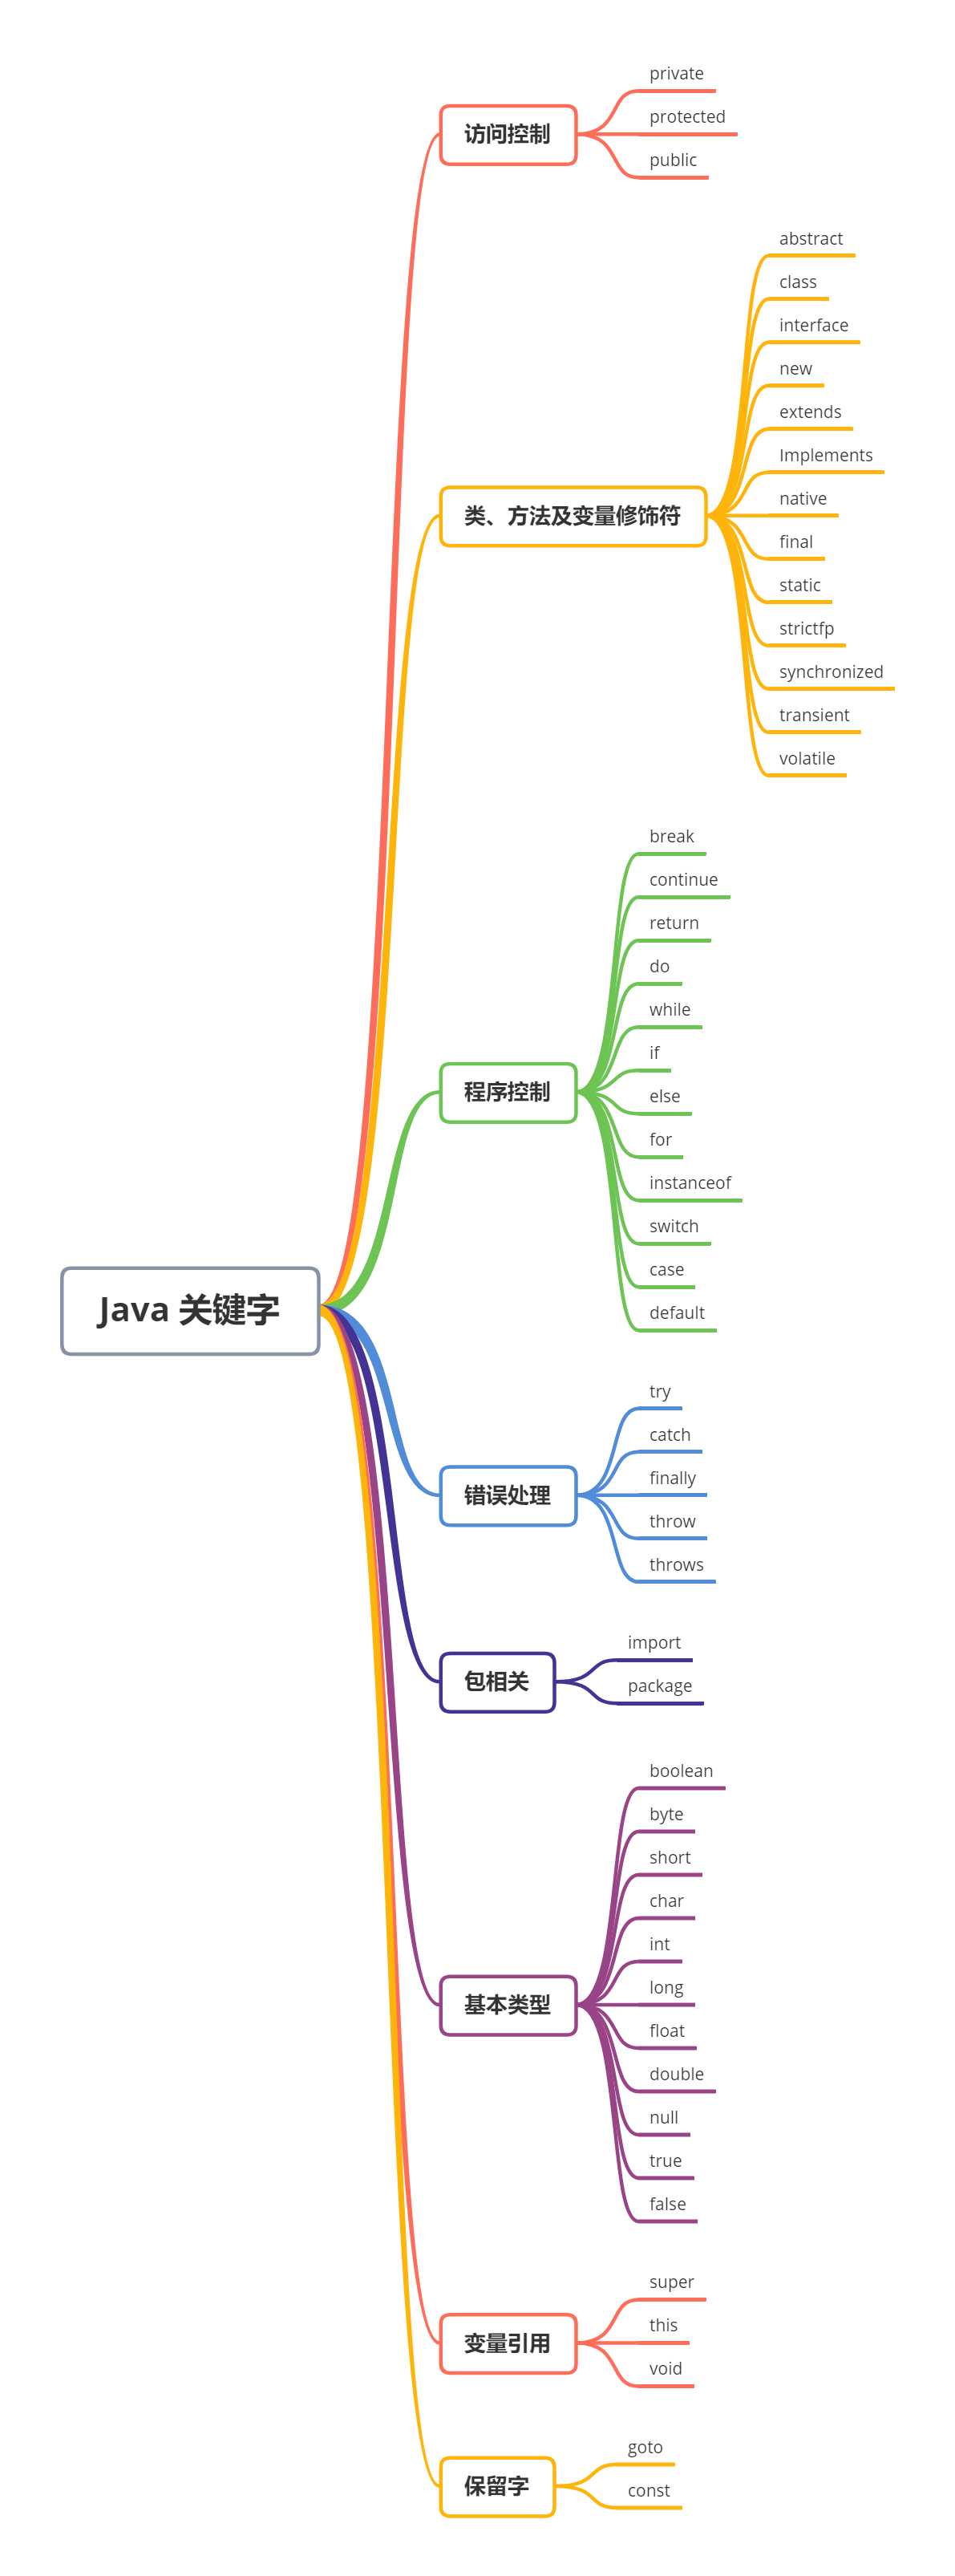 Java 关键字